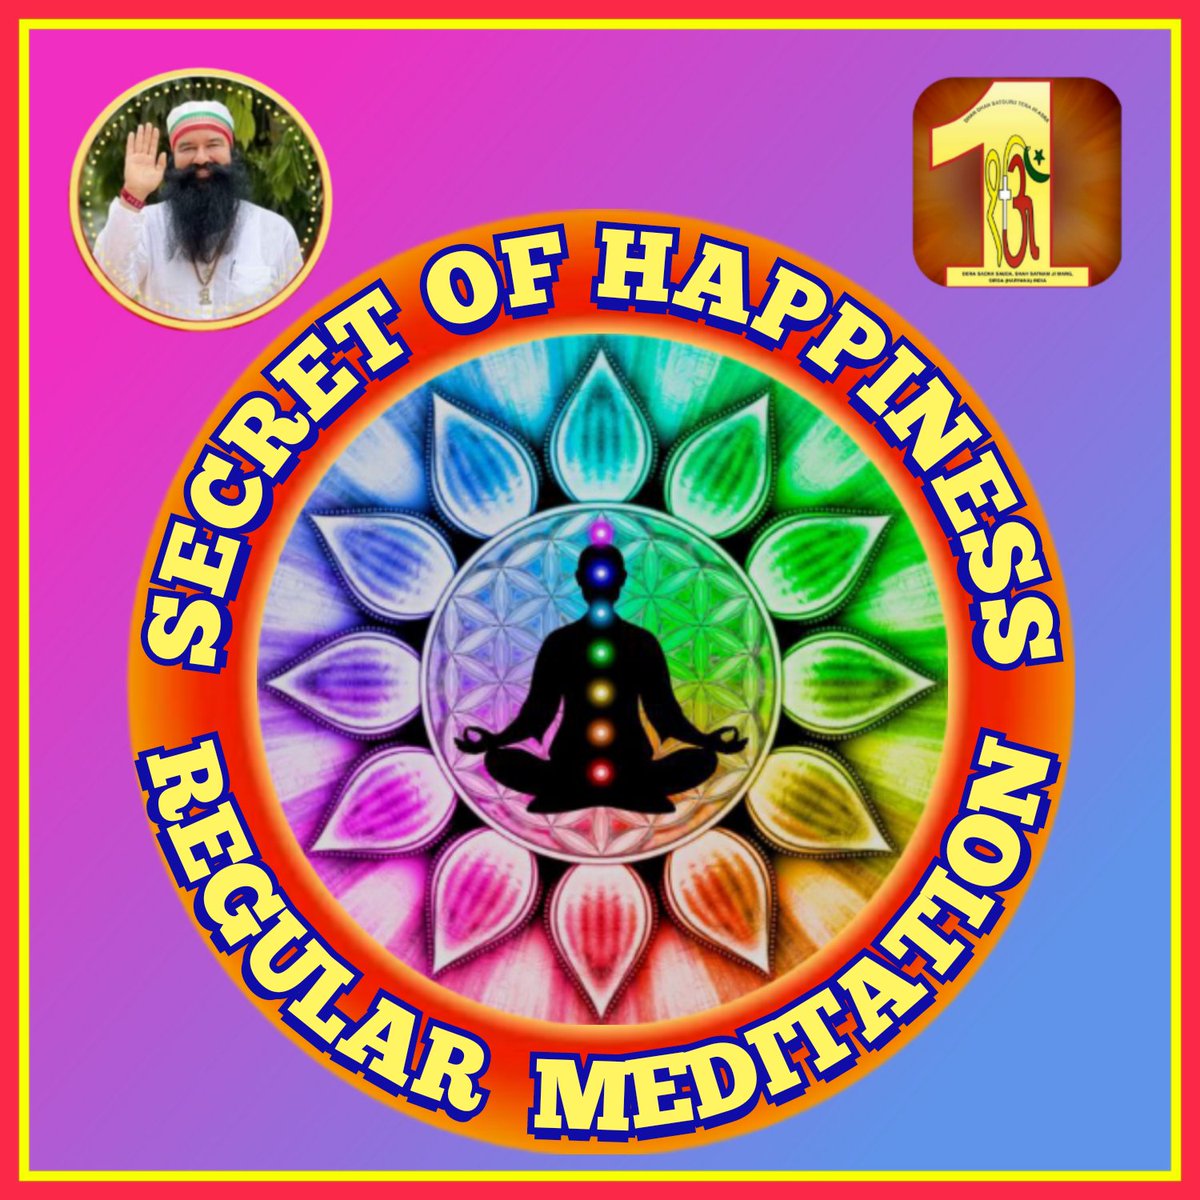 Regular meditation is the key to permanent happiness:- #SaintDrMSG.

#KeyToHappiness
#MethodOfMeditation #Meditation
#HappinessMantra #MeditationBenefits
#DeraSachaSauda